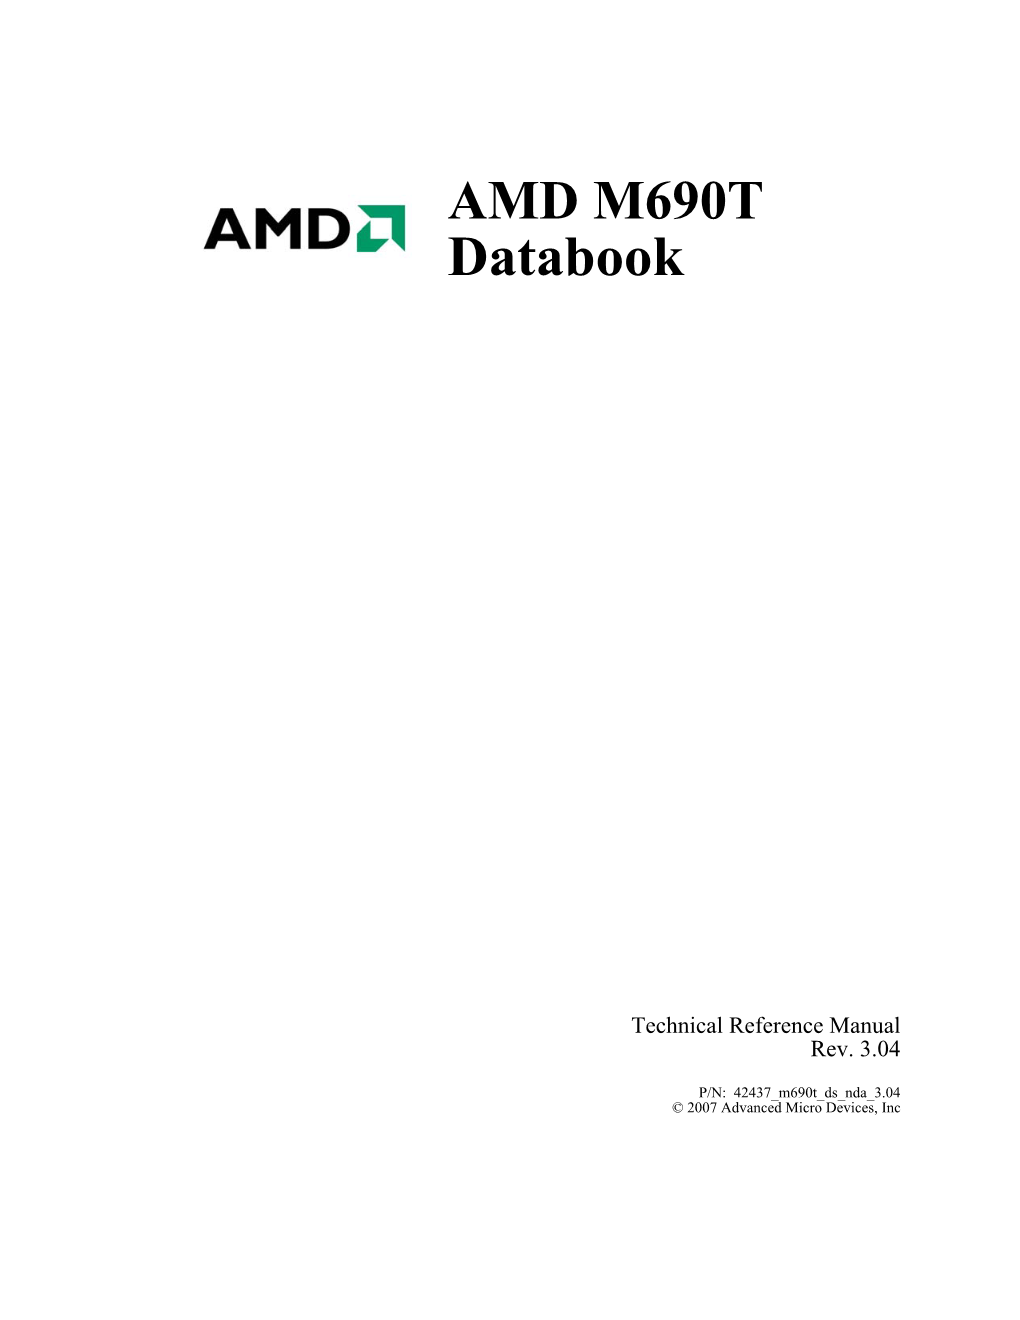 AMD M690T Databook